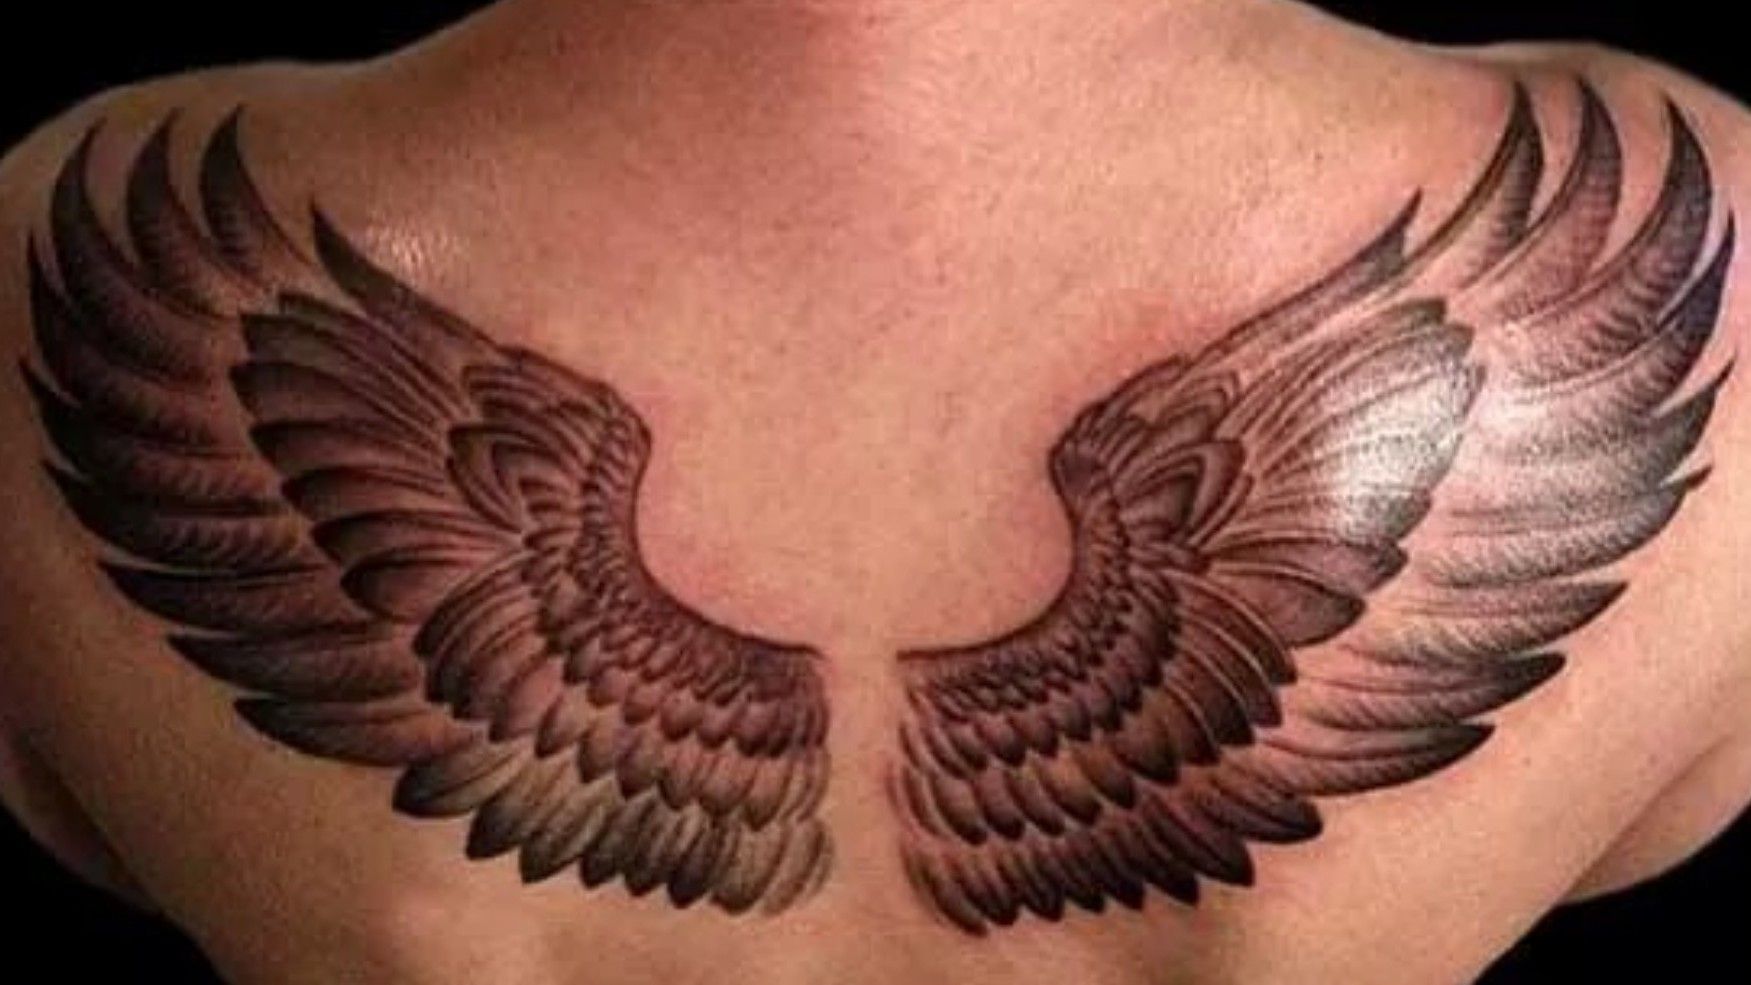 Eagle wings tattoo on back neck Done By Abhishek Prajapati  wwwtattoozmachinecom 9792939760  By TattooMachine  Facebook